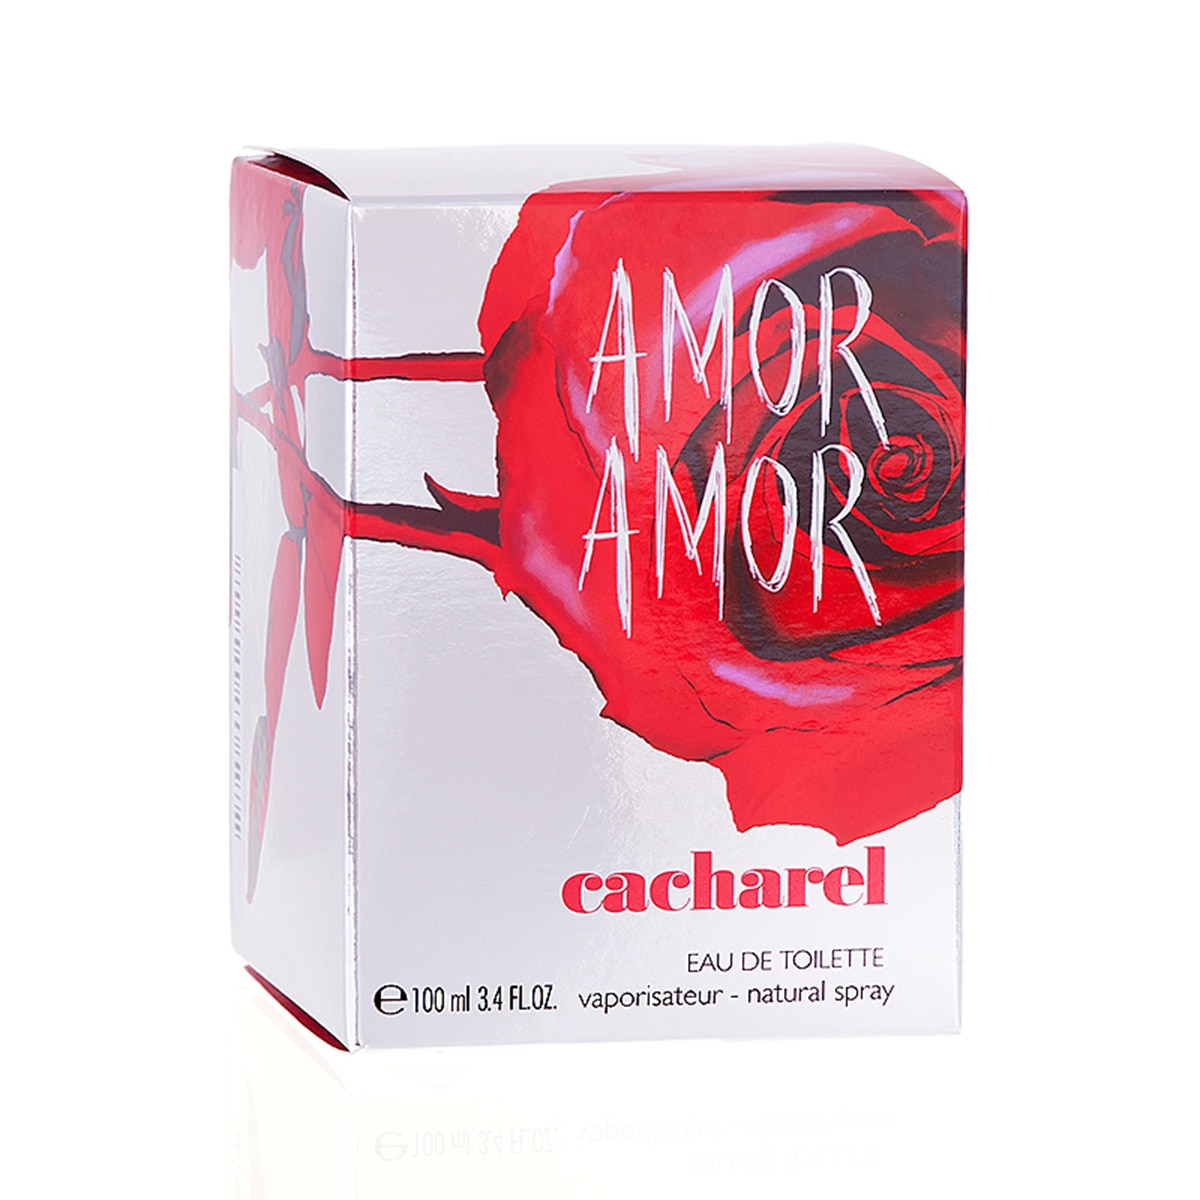 Cacharel, Amor Amor (100ml)